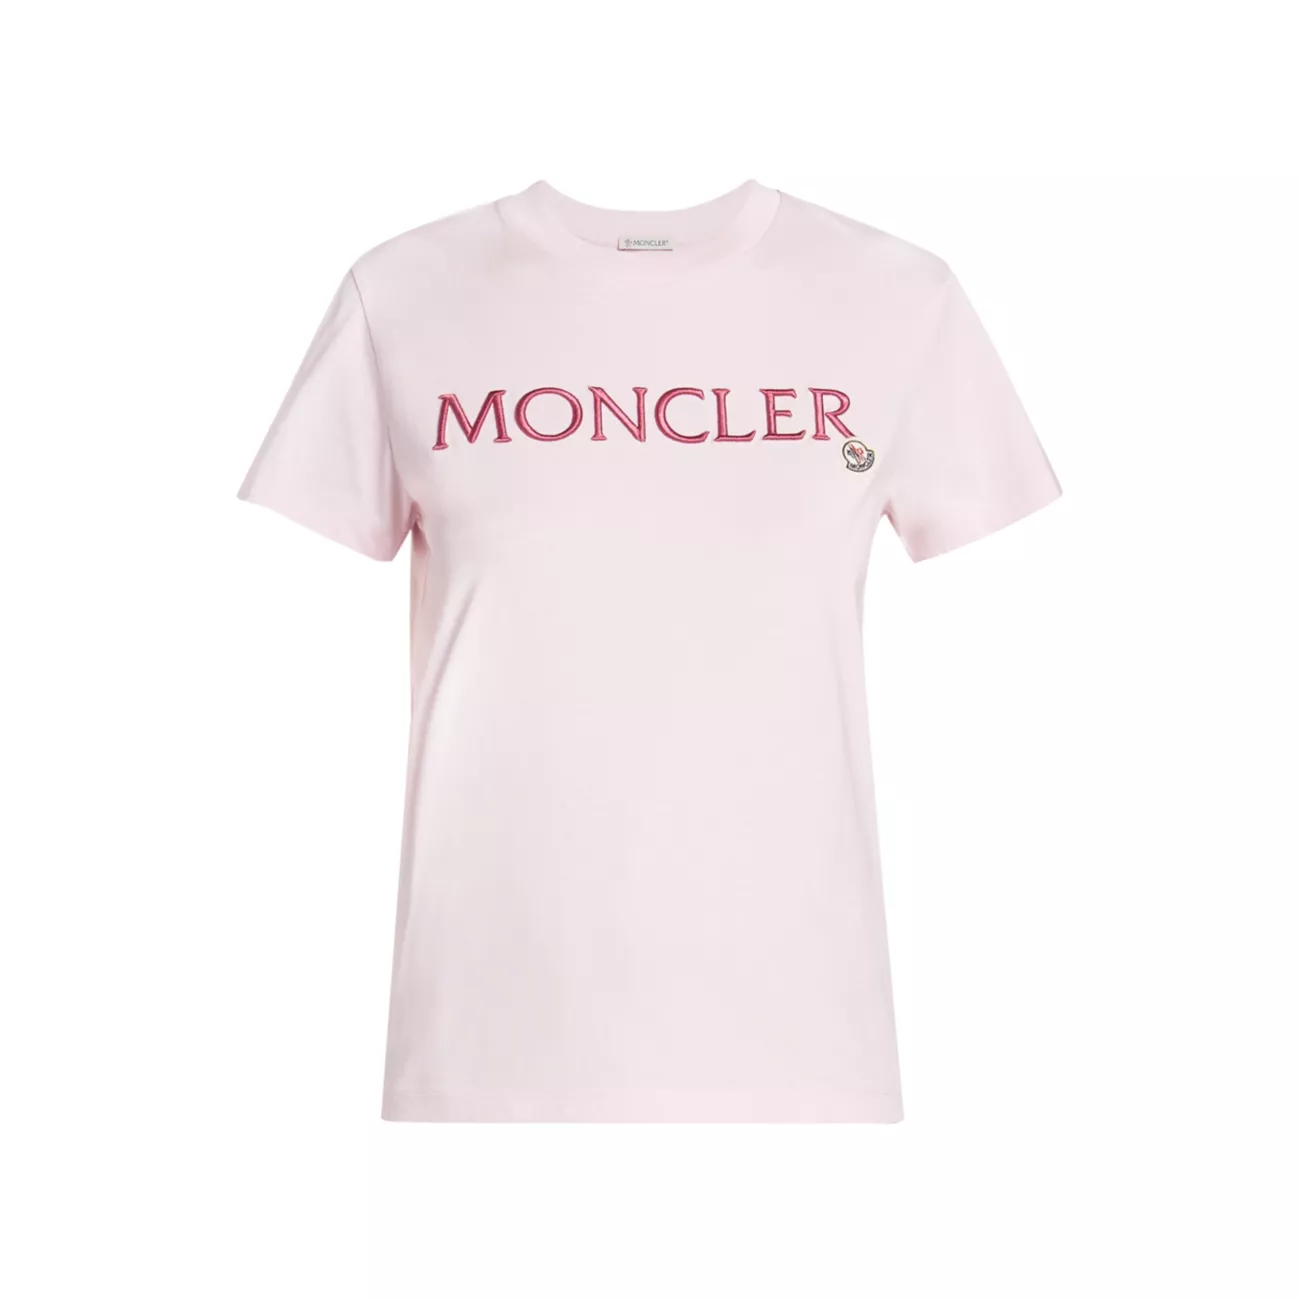 Хлопковая футболка с логотипом и короткими рукавами Moncler